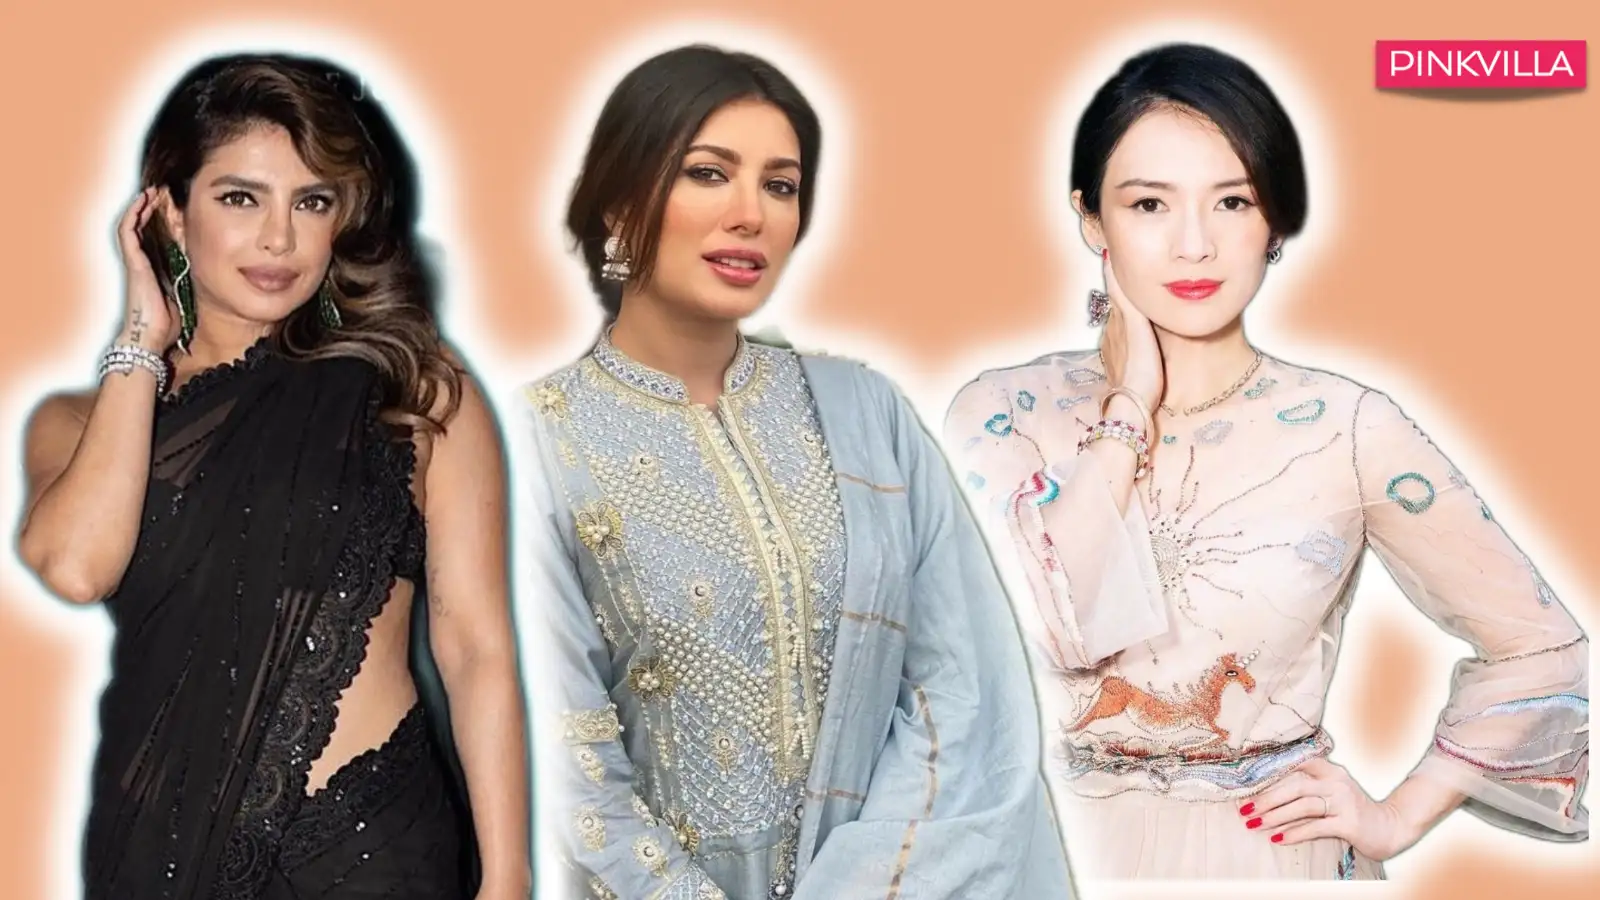 25 Most Beautiful Asian Women with Dazzling Personalities PINKVILLA